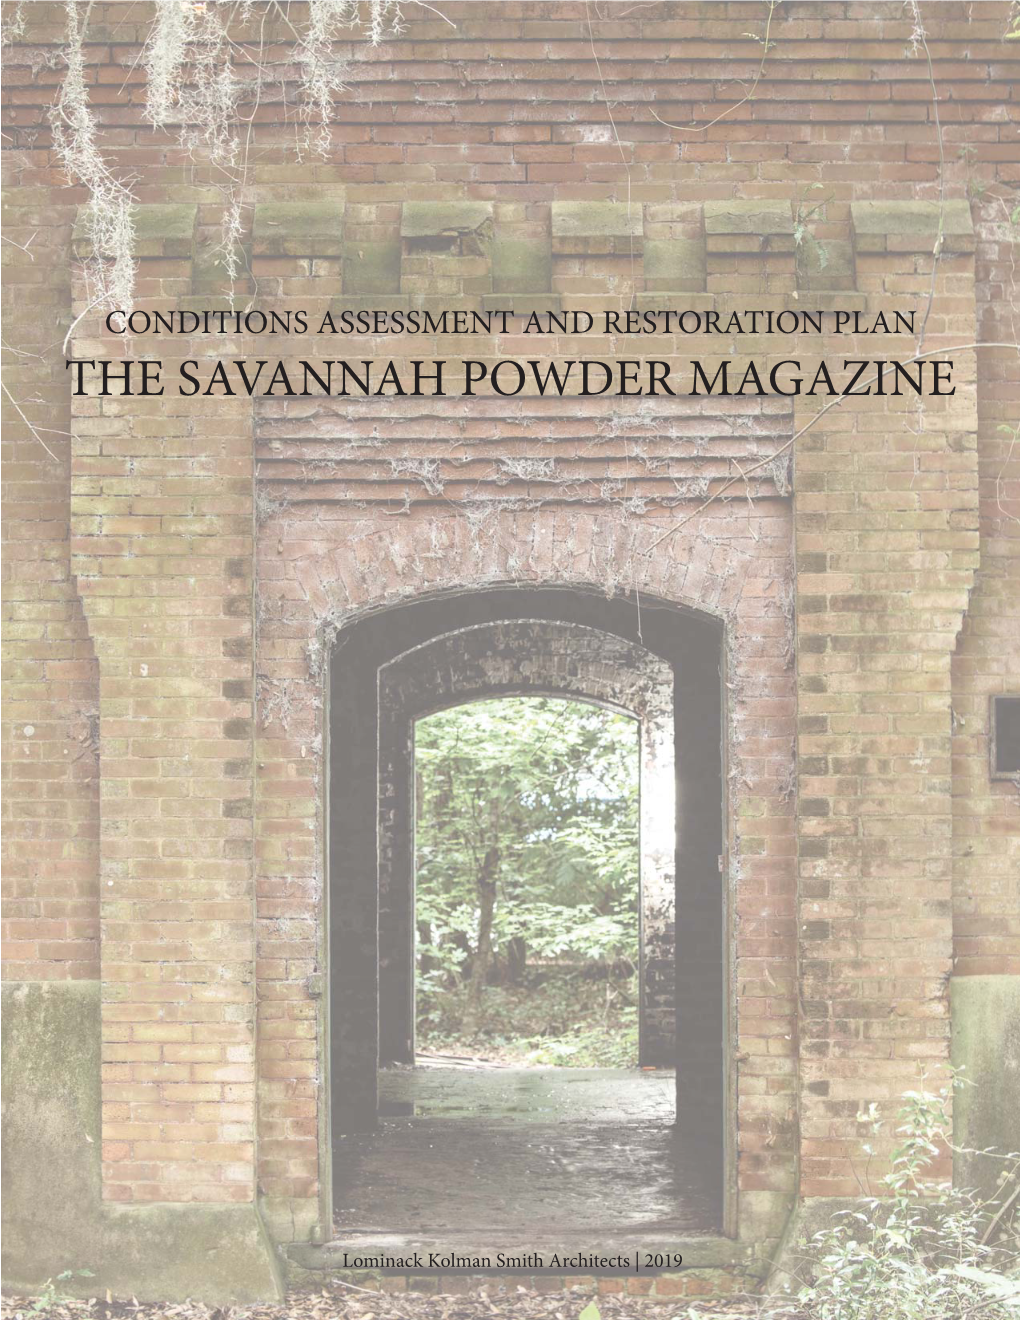 Savannah Powder Magazine Report